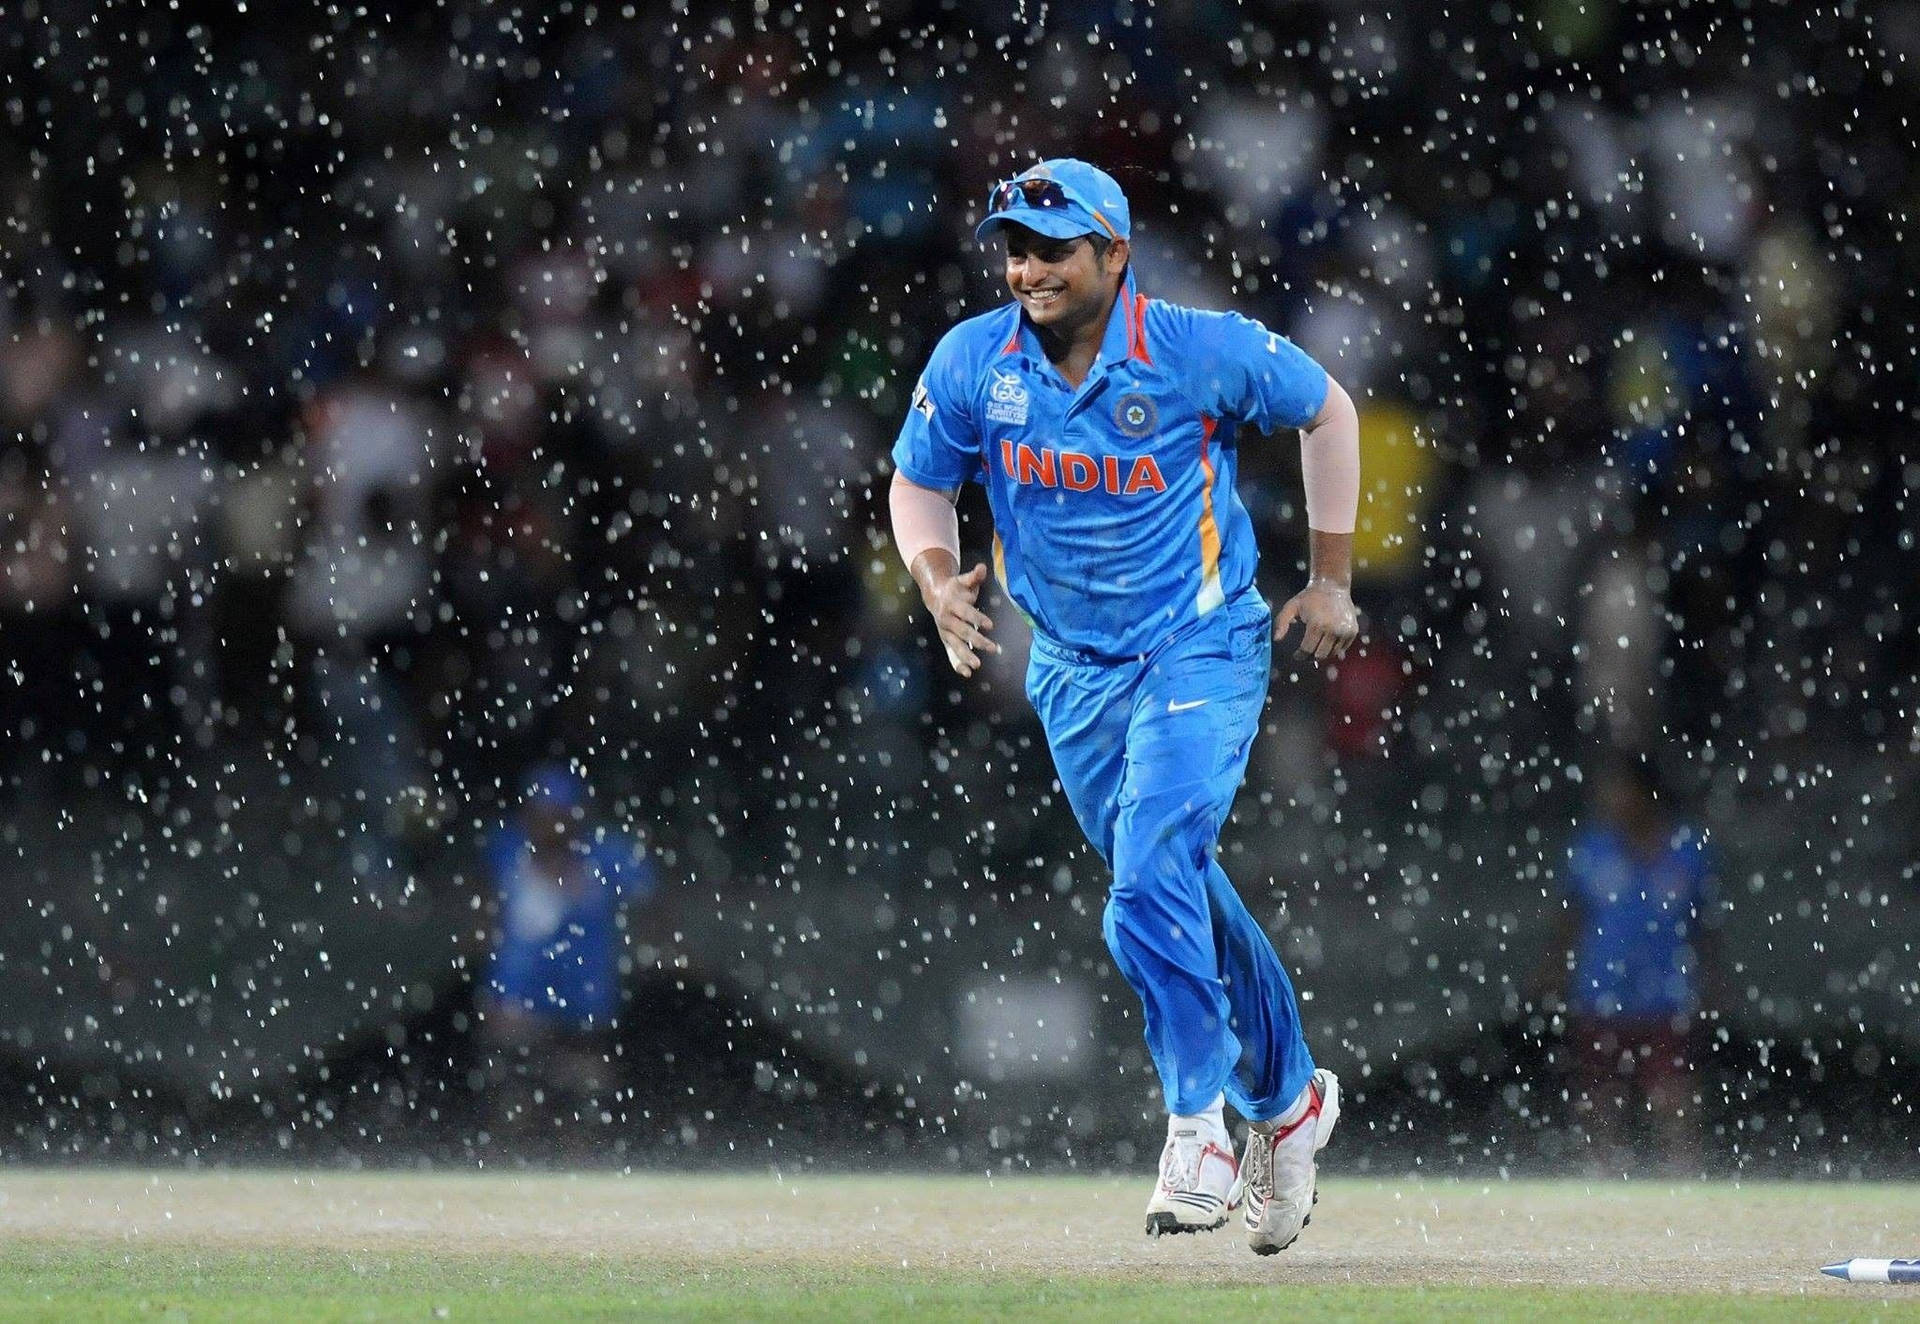 Indian Cricket Team Member Running In The Rain Wallpaper